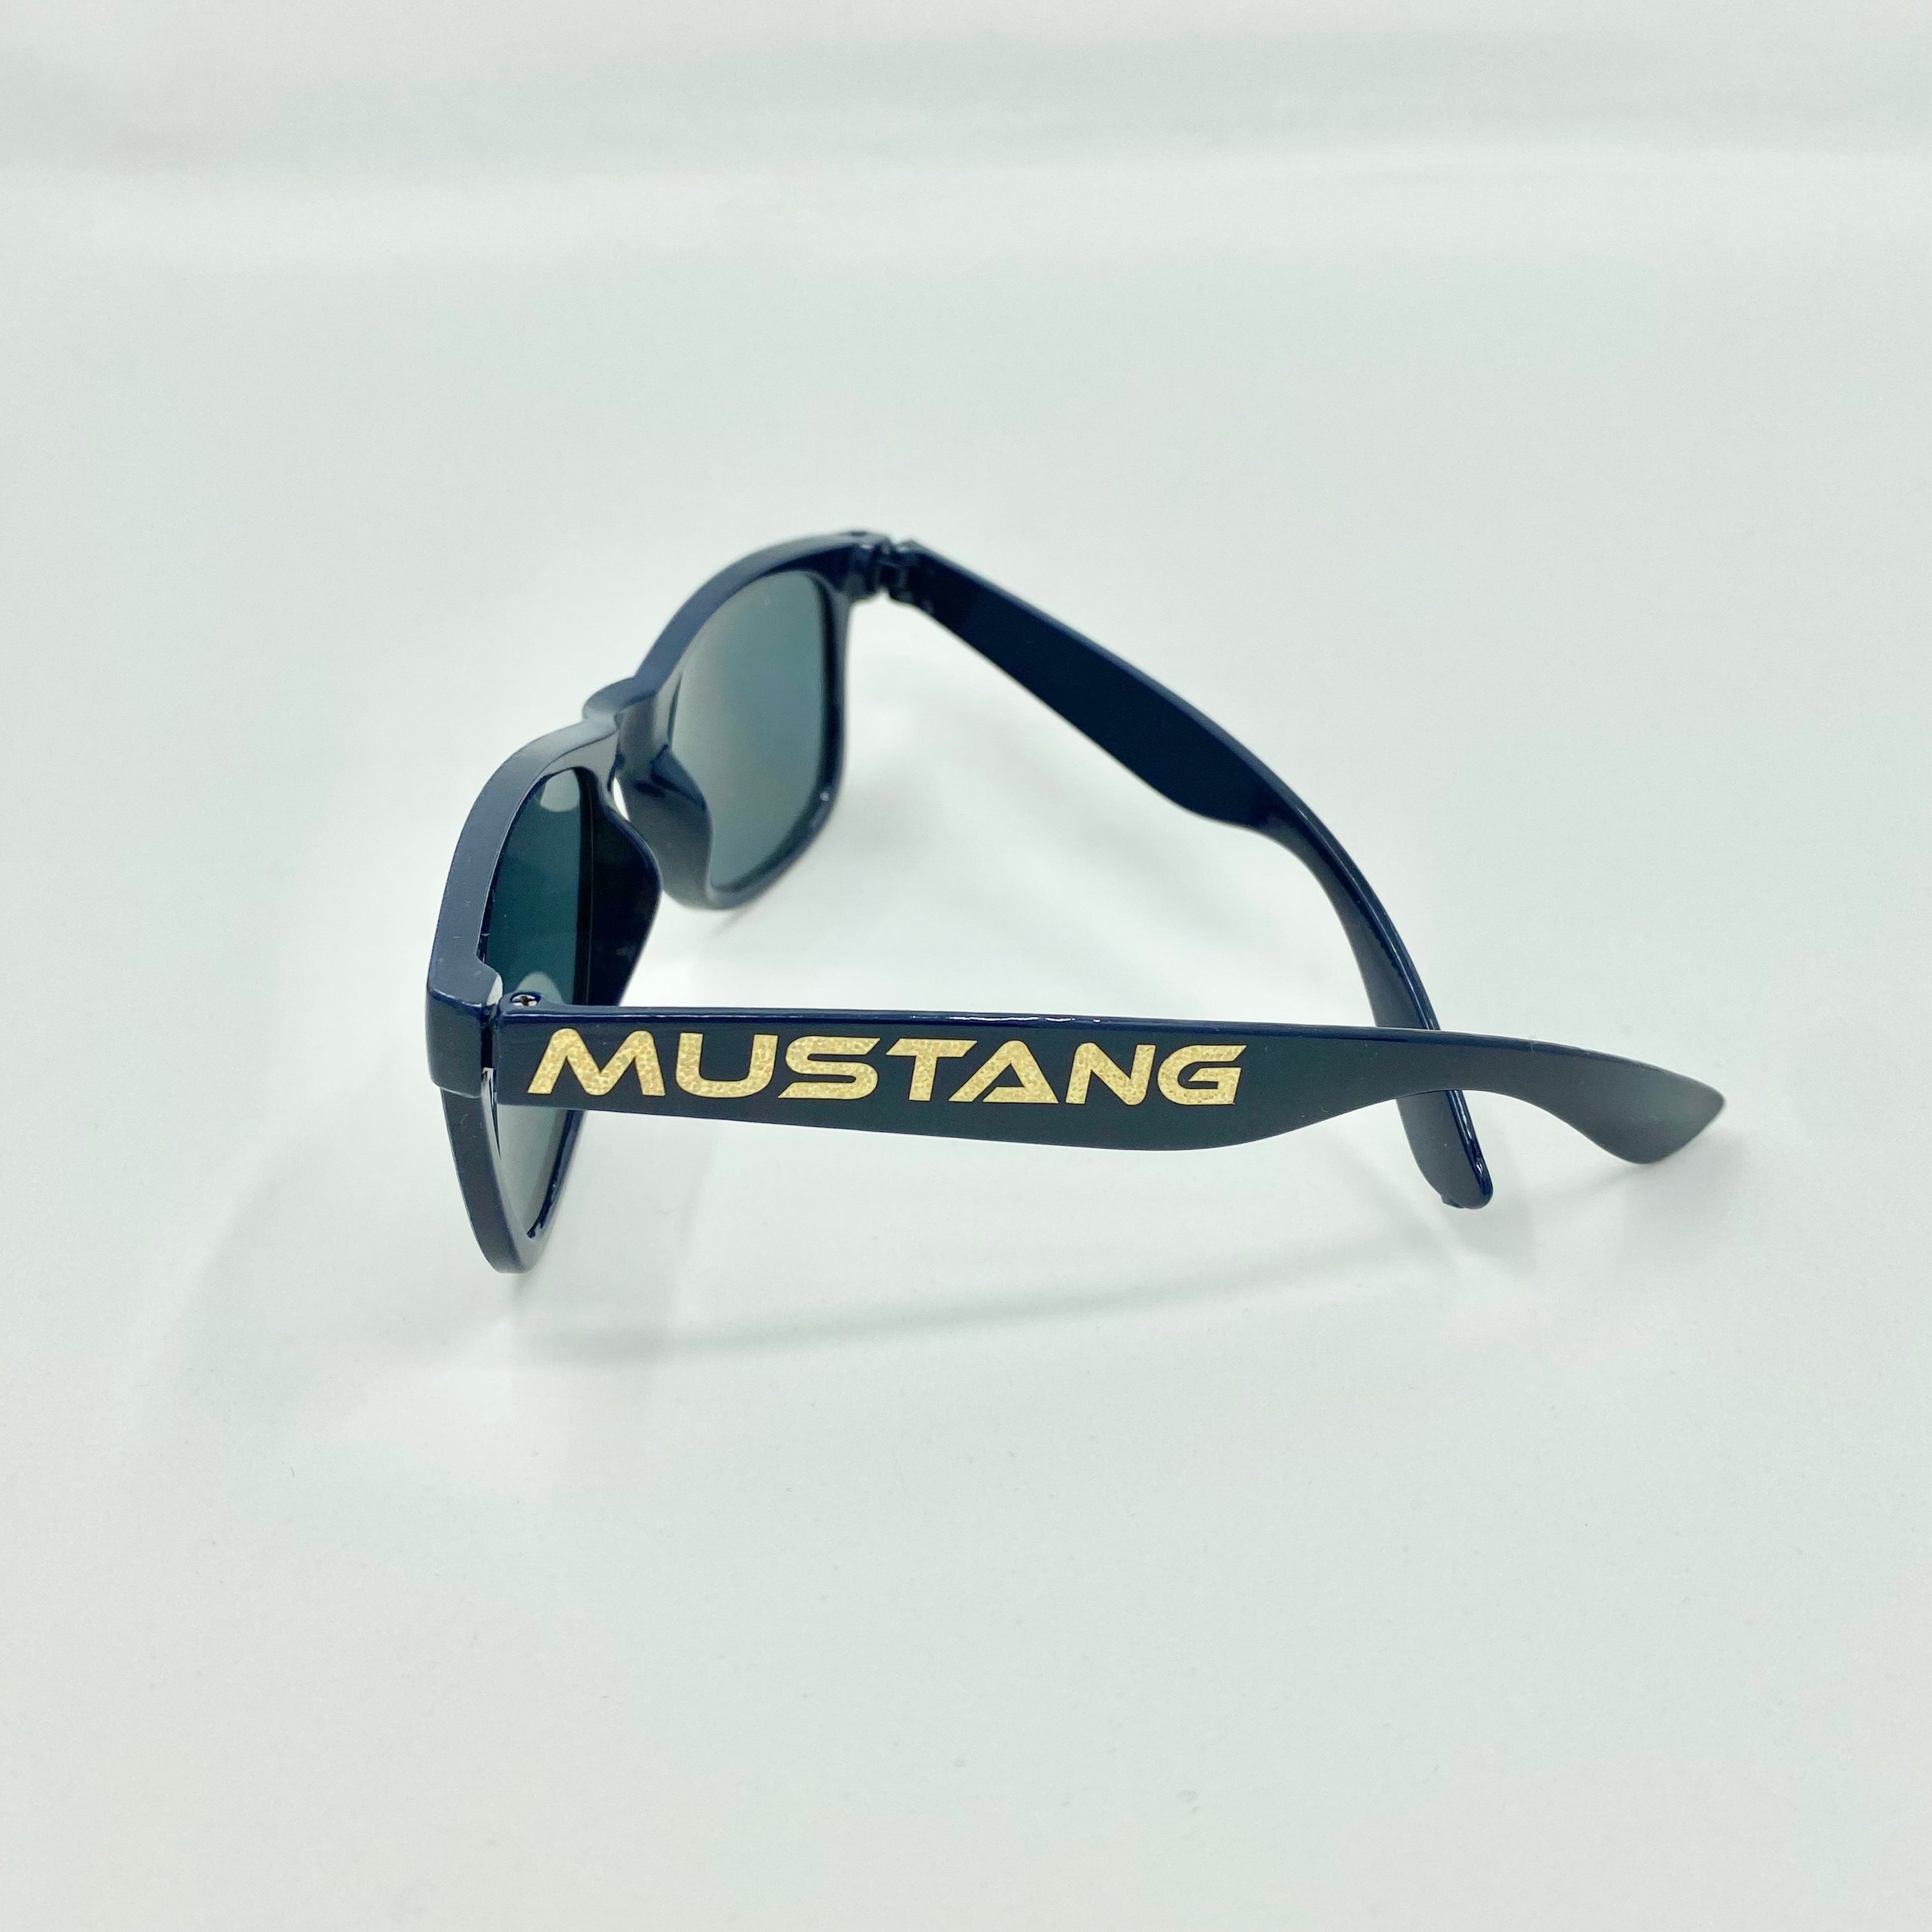 Mustang – Mustang Shop